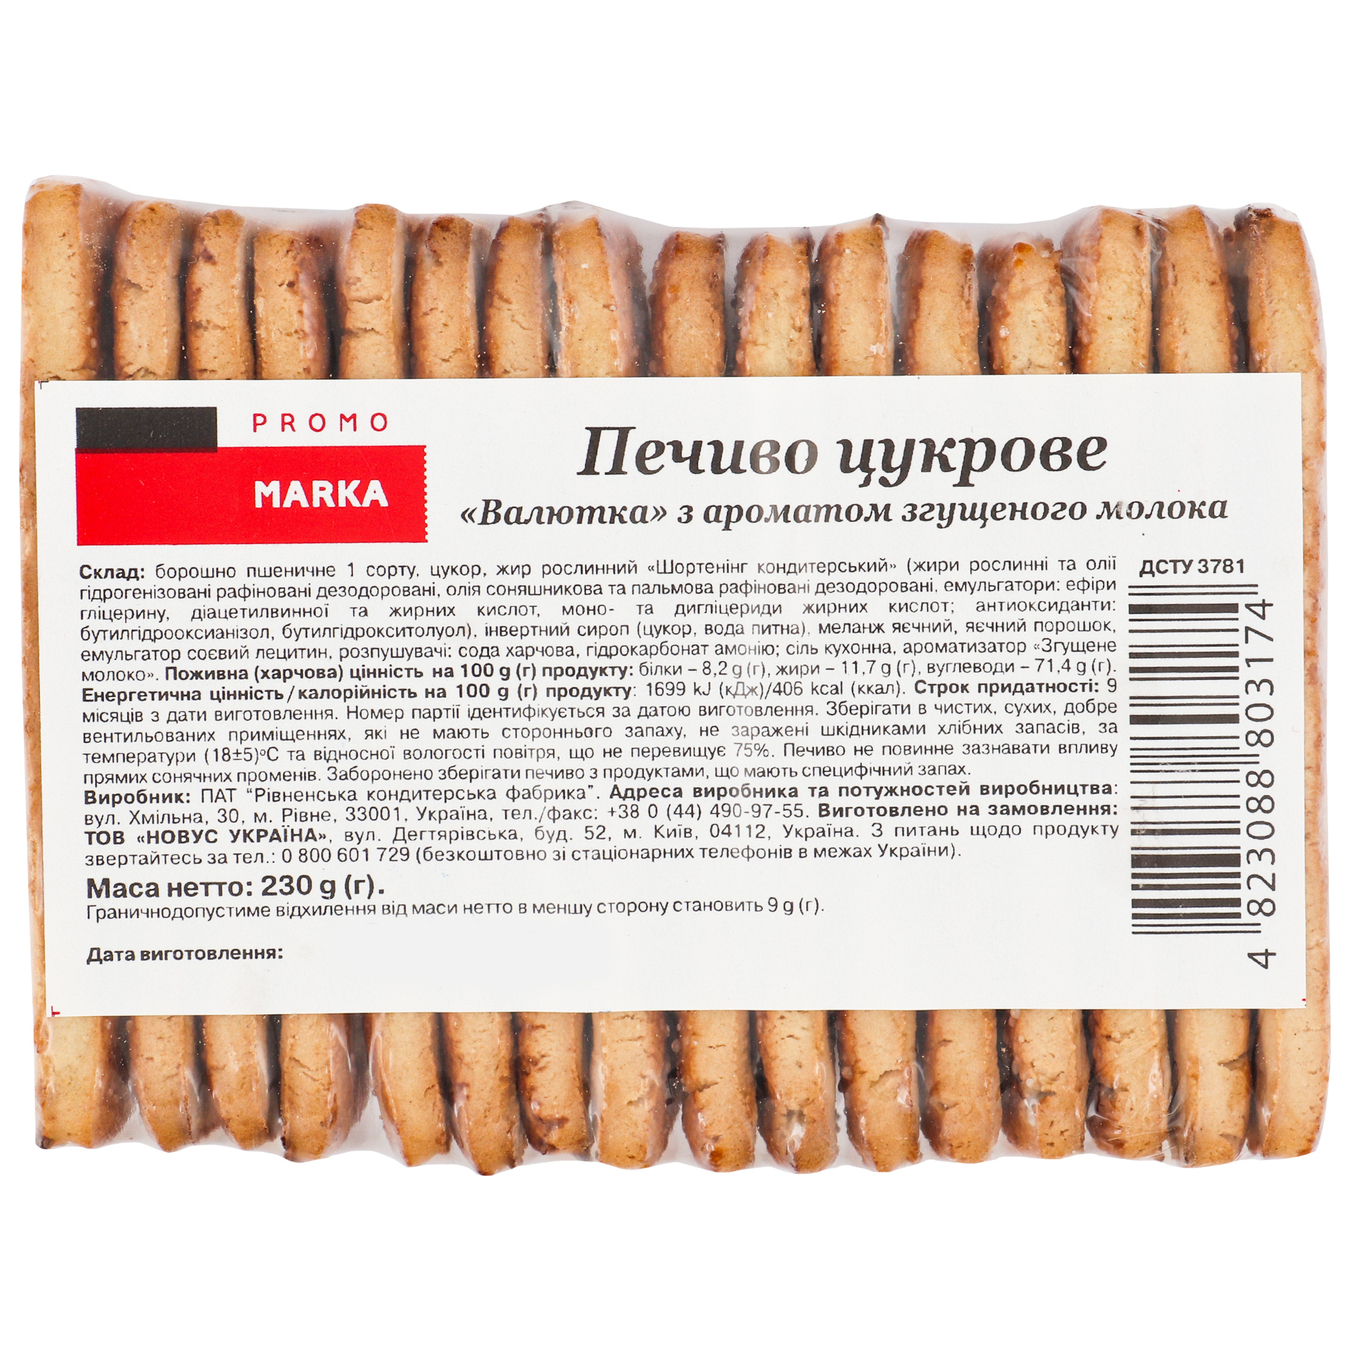 Marka Promo Valiutka with Condenced Milk Flavor Cookies 230g